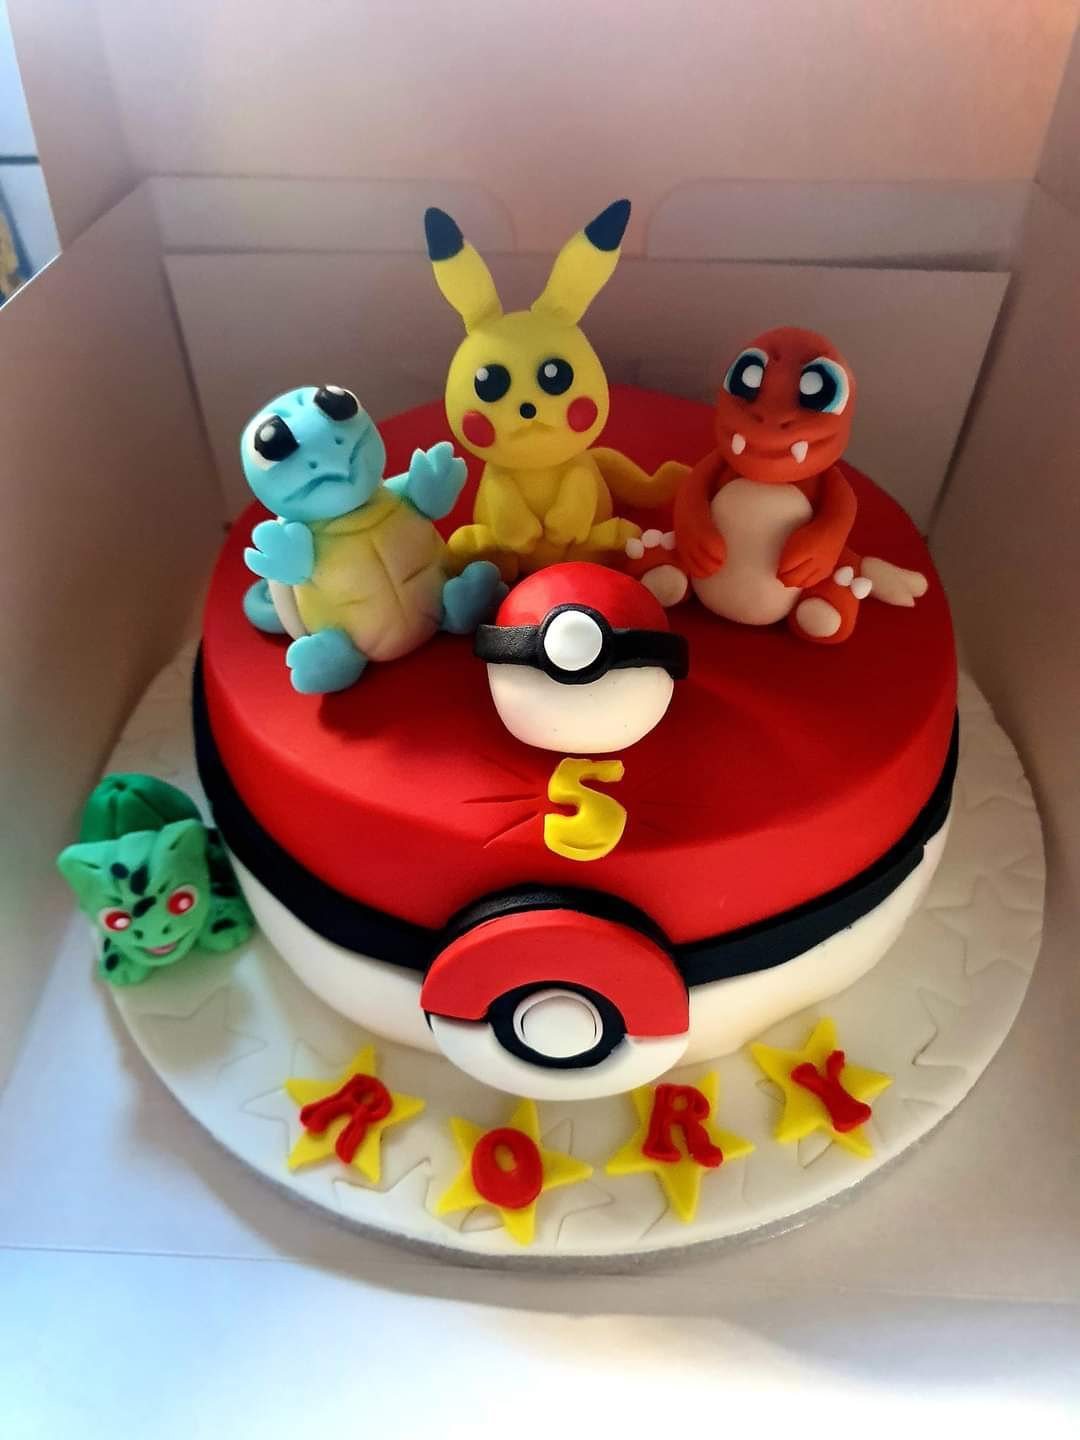 Kids Birthday Cakes - How to Easily Turn Them into Theme Cakes